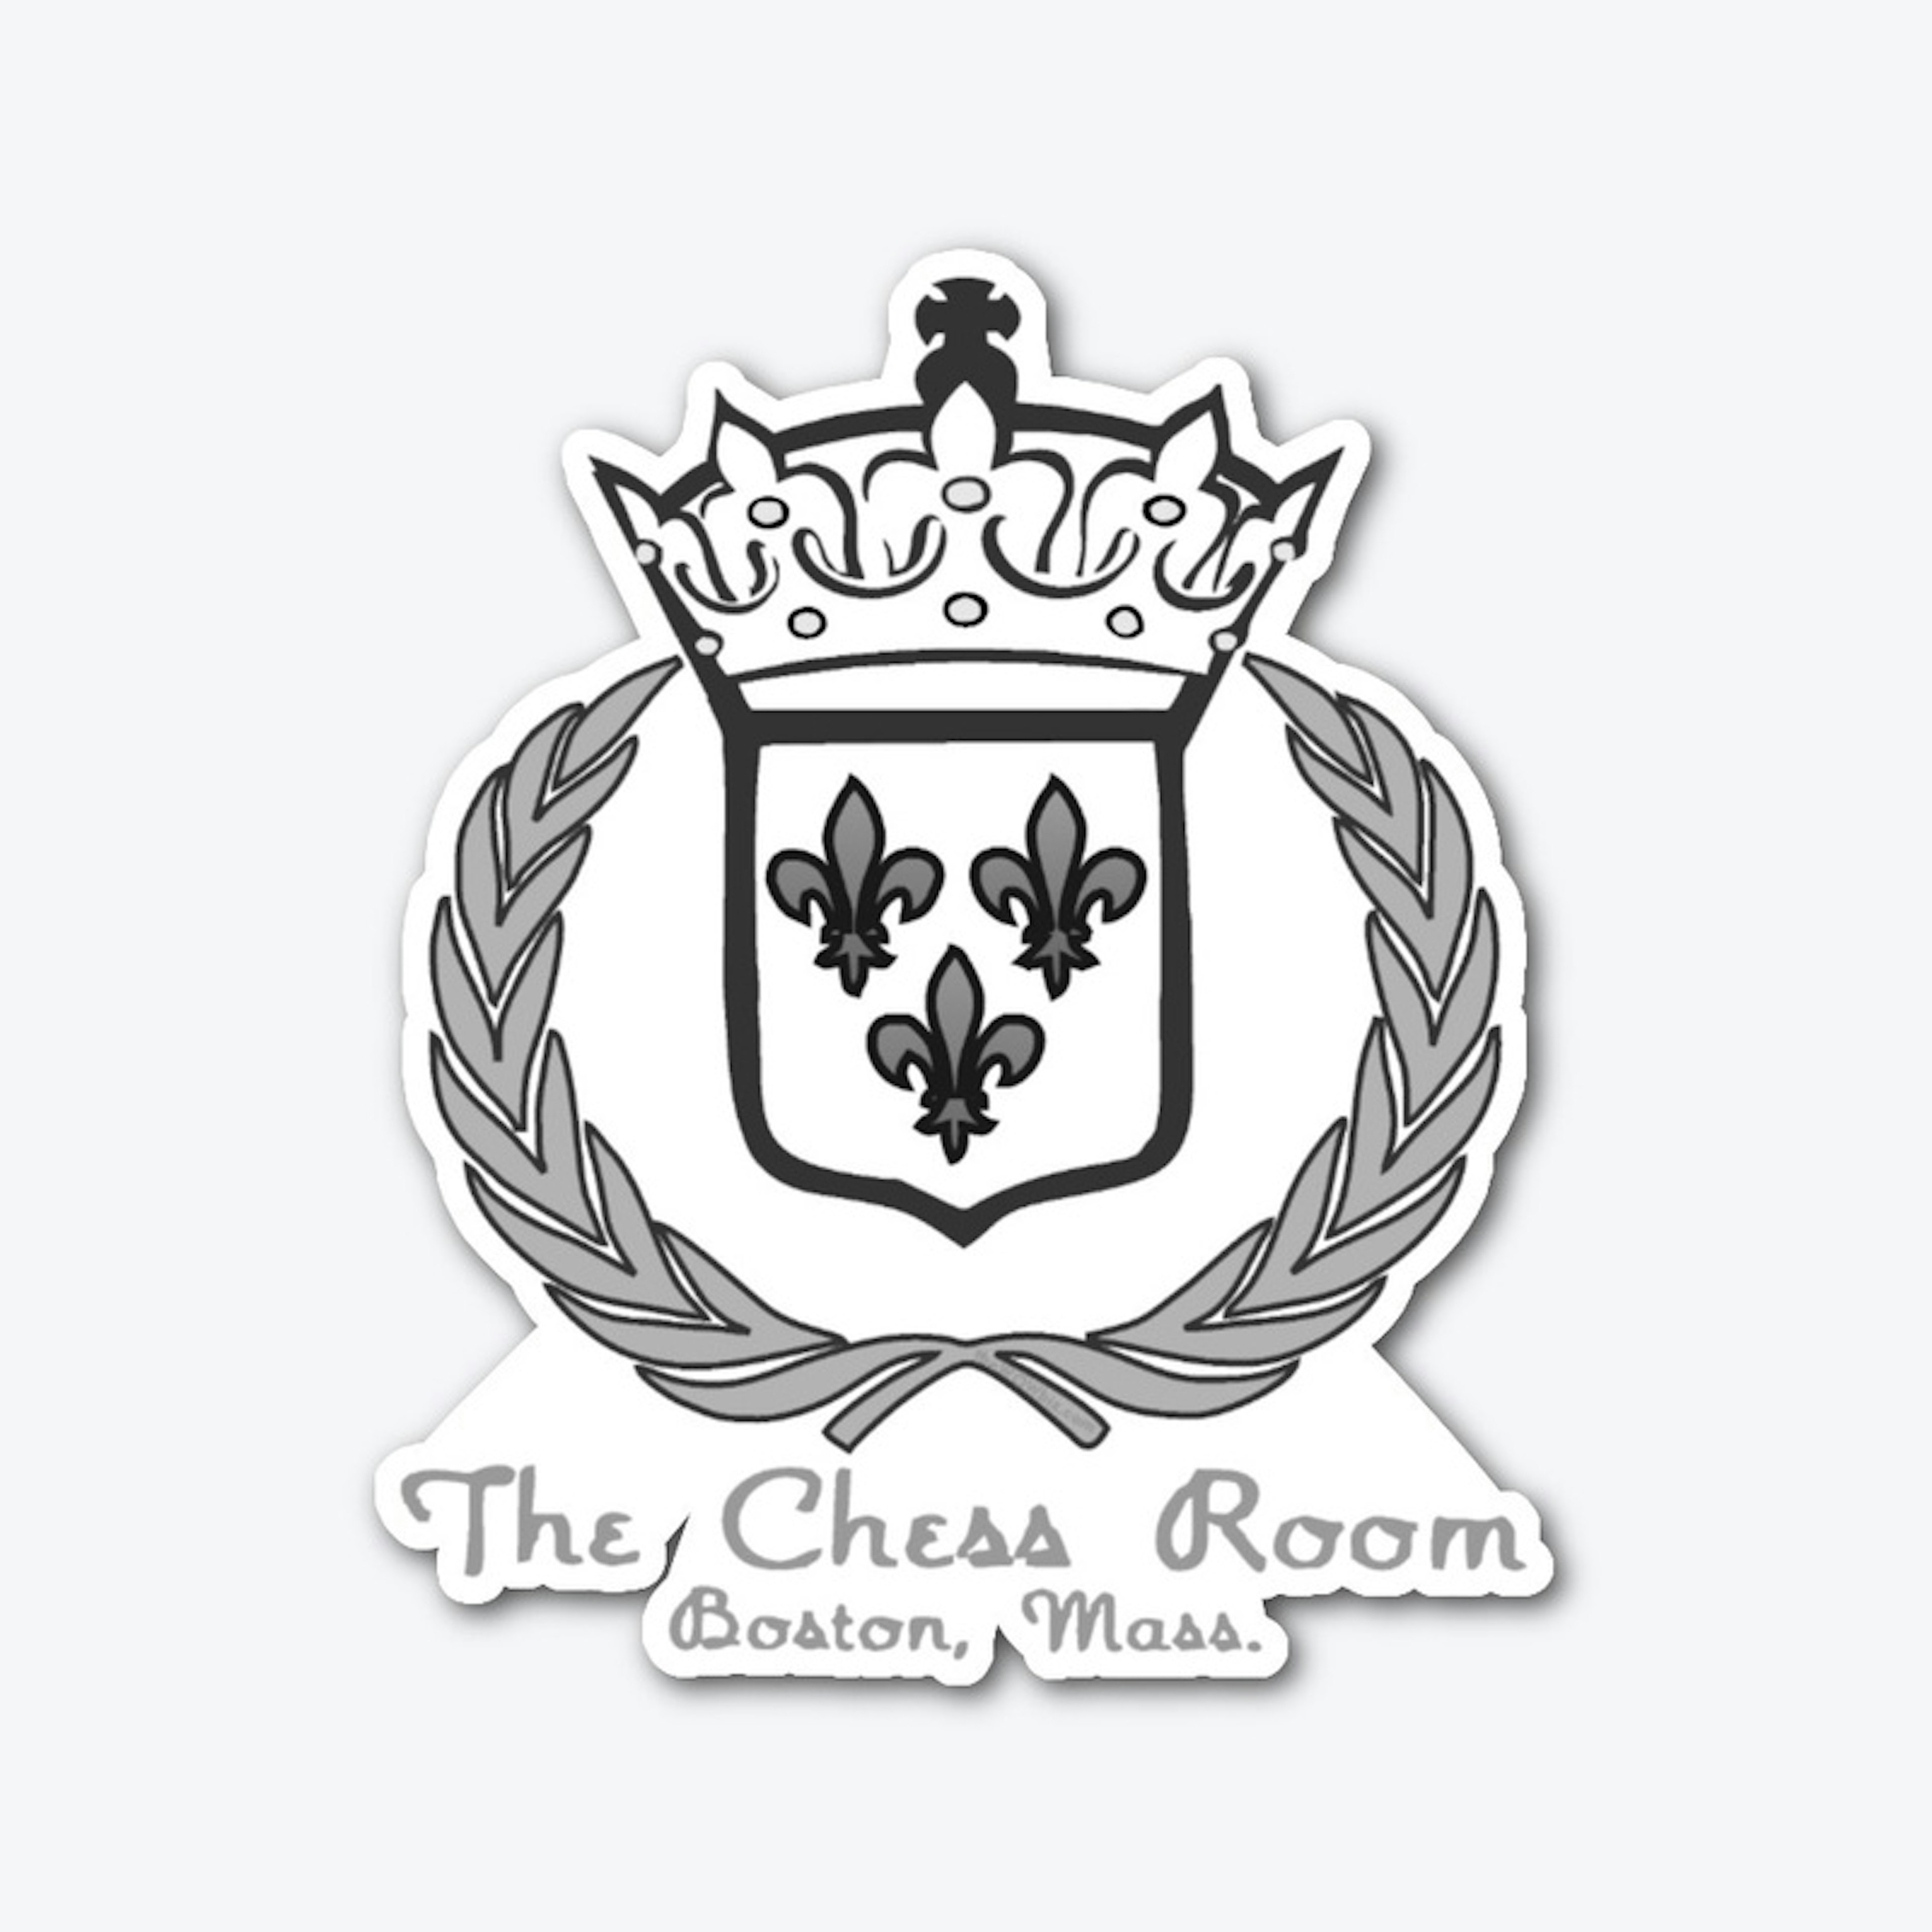 ChessRoom